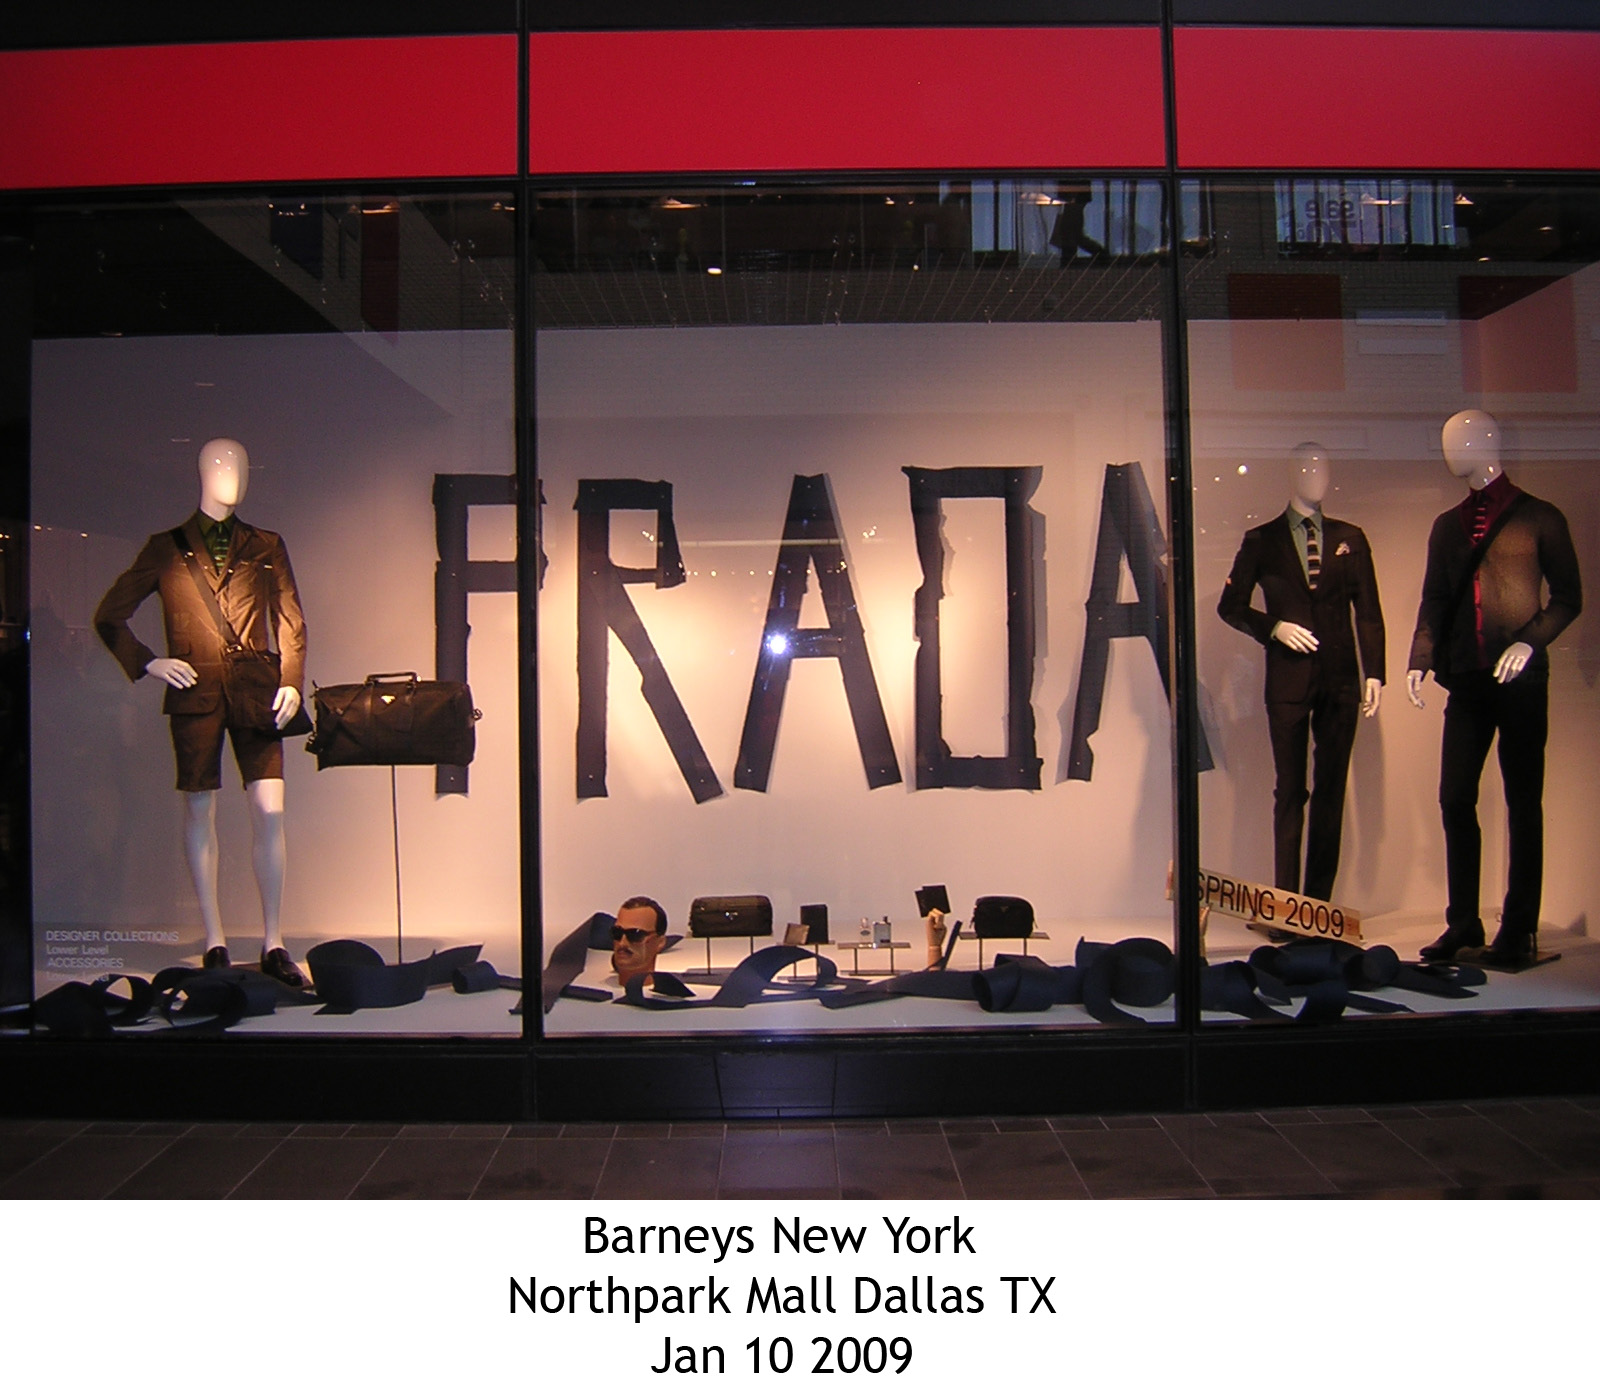 Store Windows in Dallas: Barneys New York